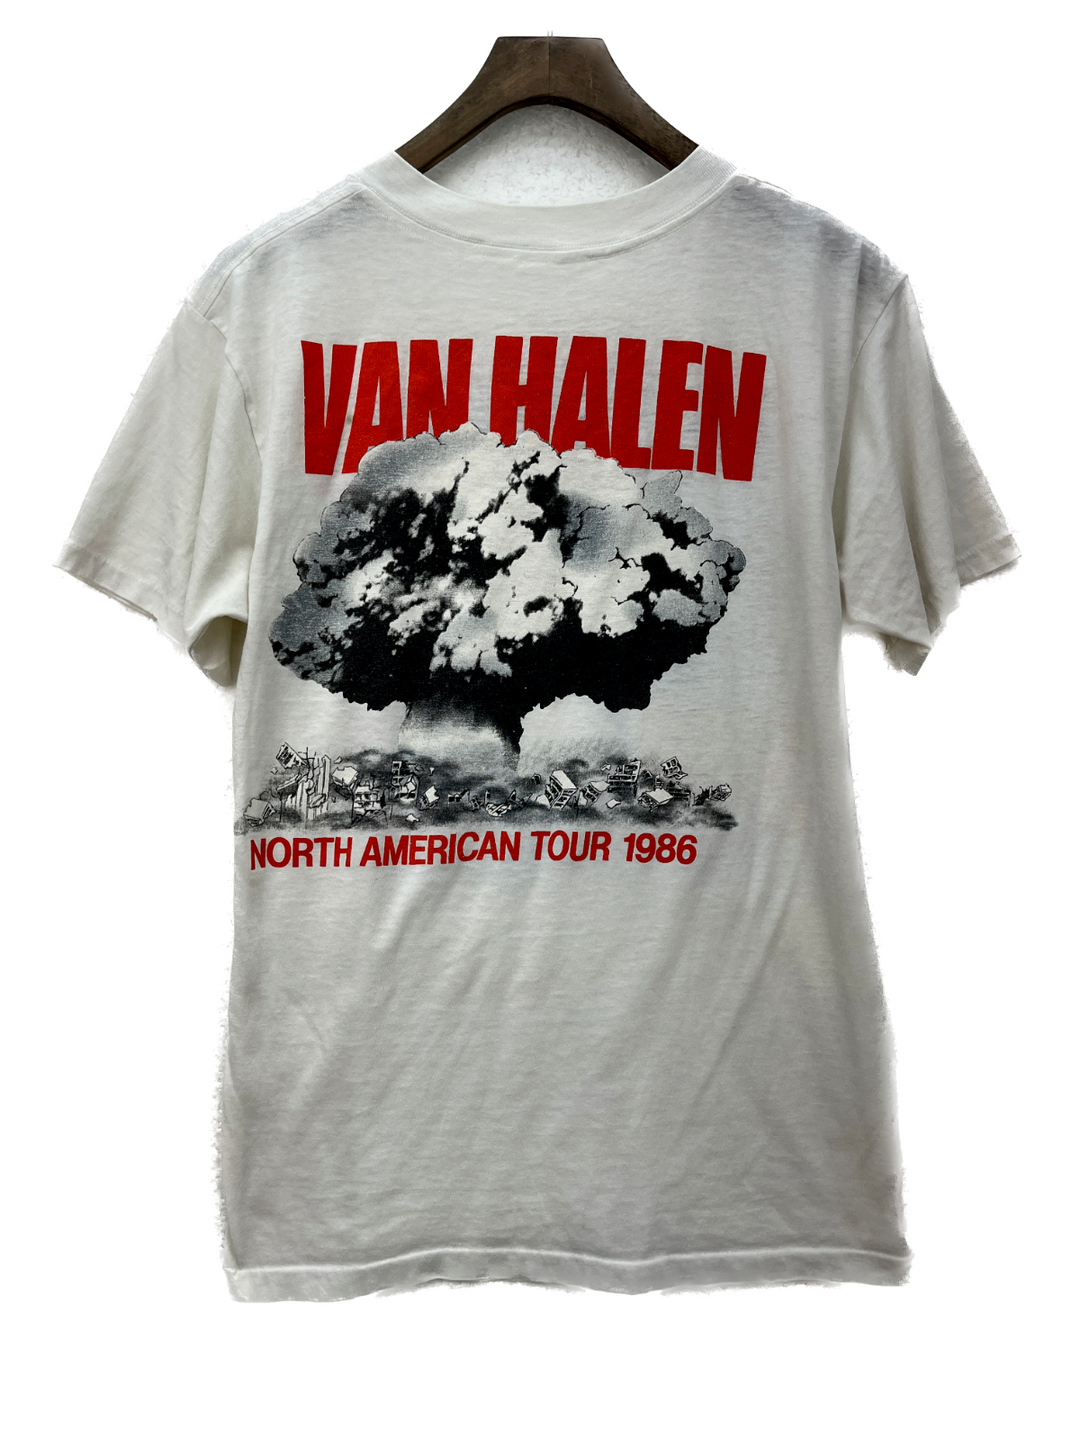 1986 Van Halen North American Tour Vintage Distressed T-shirt Size S White